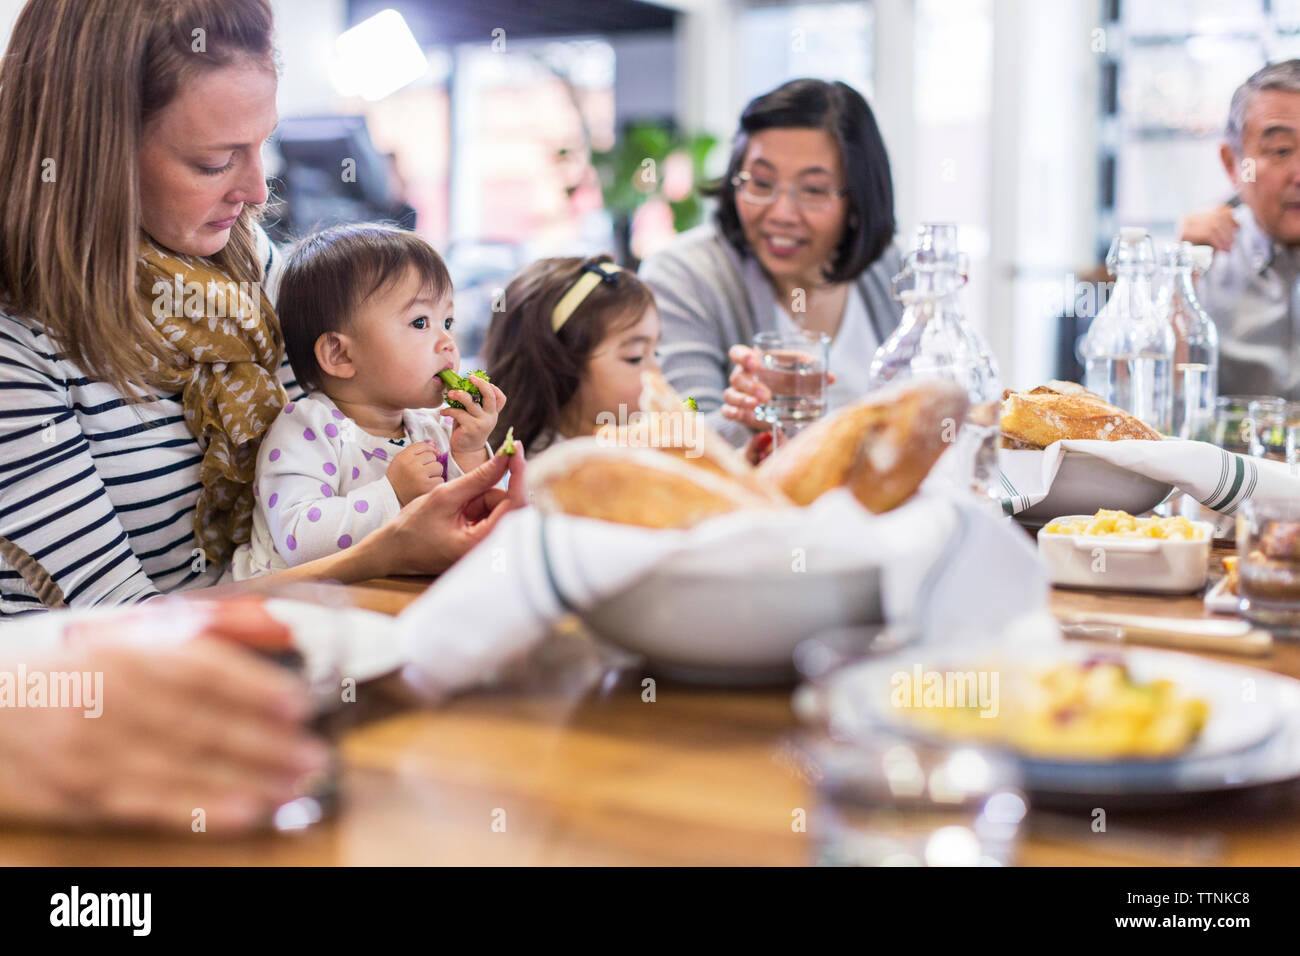 Family eating food in restaurant Stock Photo